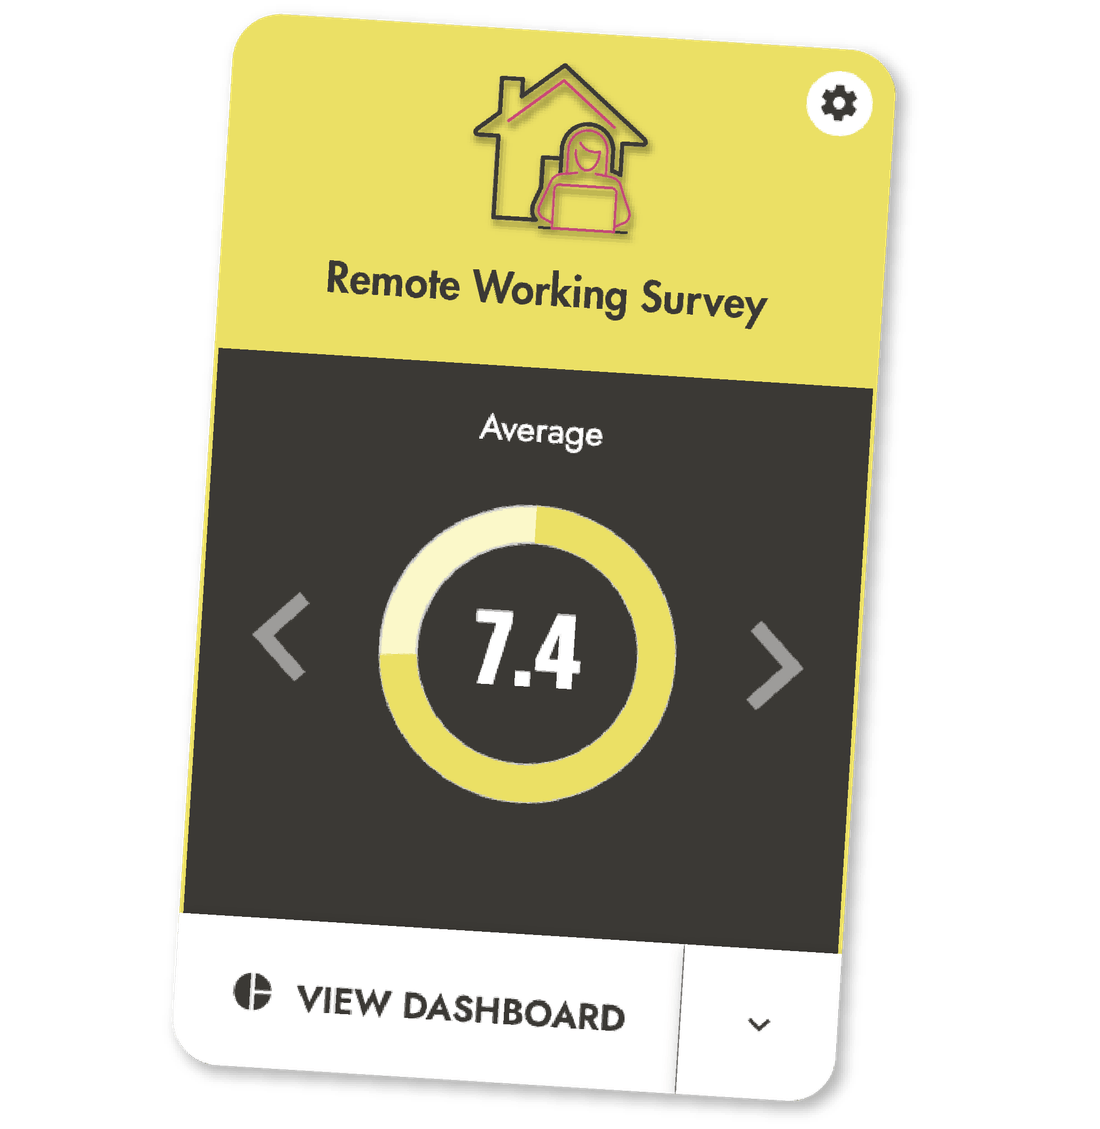 Platform image showing remote working survey results